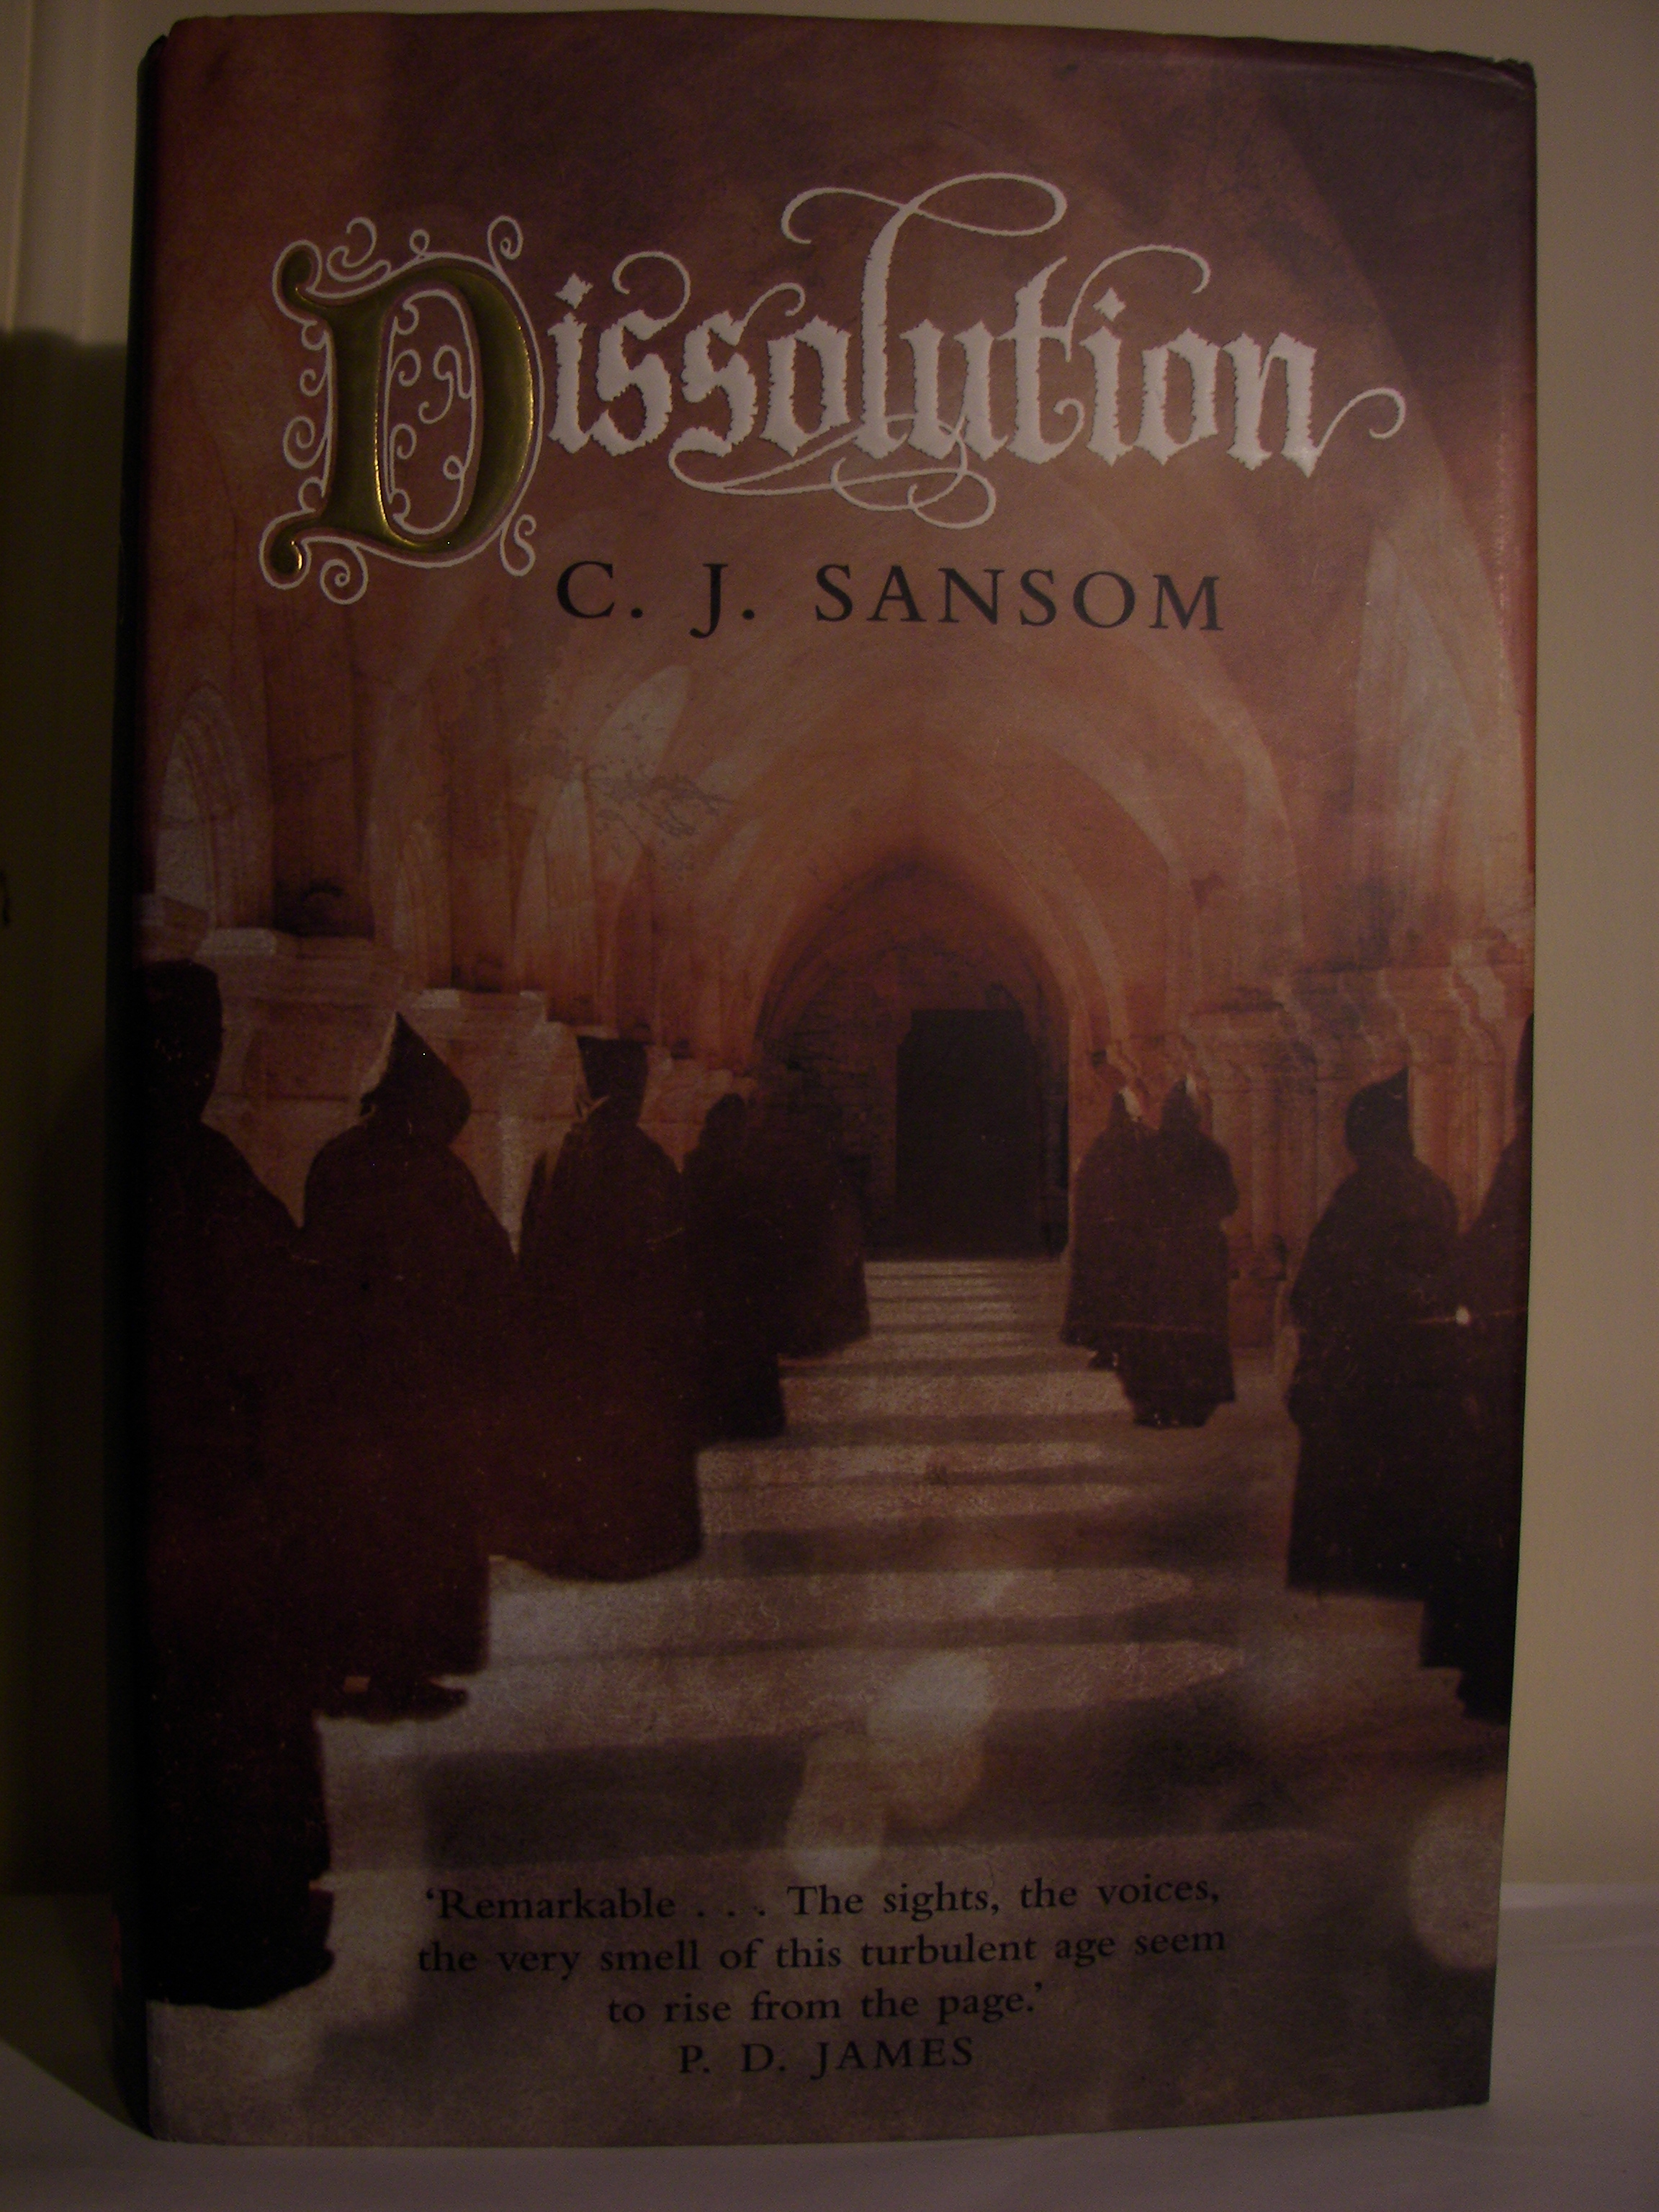 dissolution by cj sansom